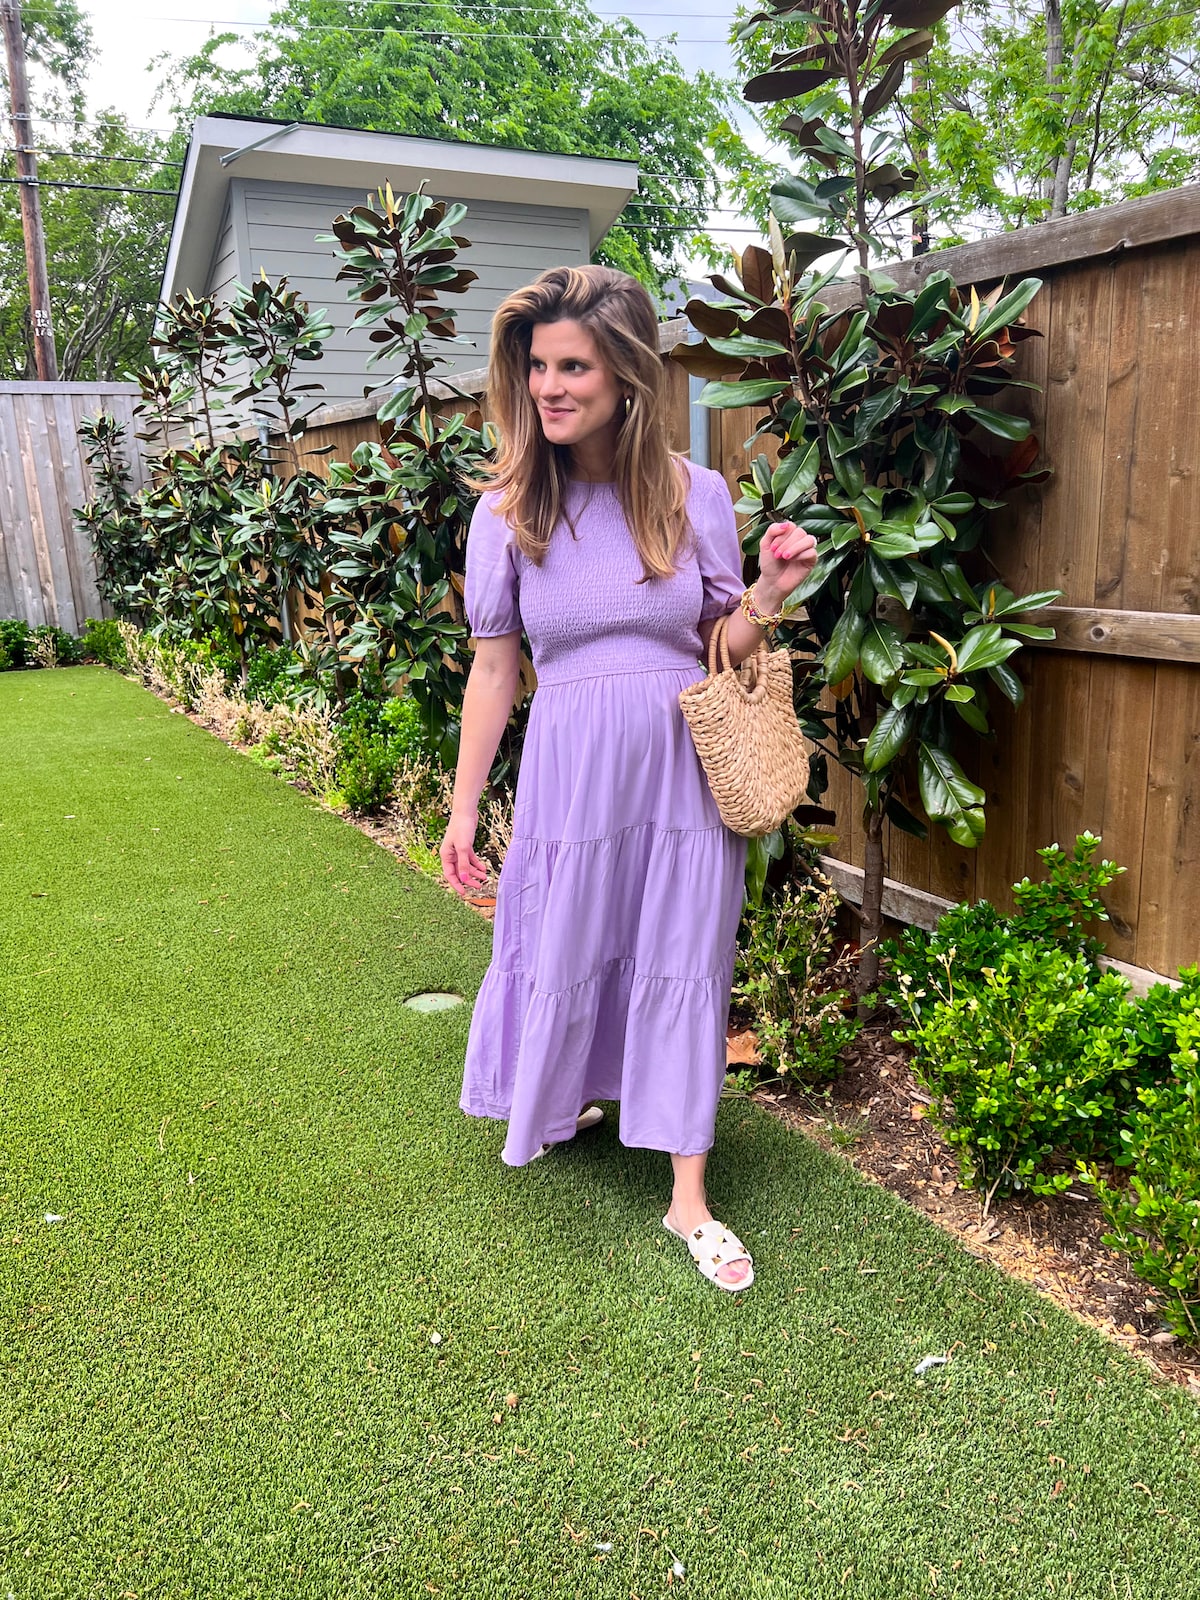 Brighton Butler wearing Amazon purple smock dress summer comfort